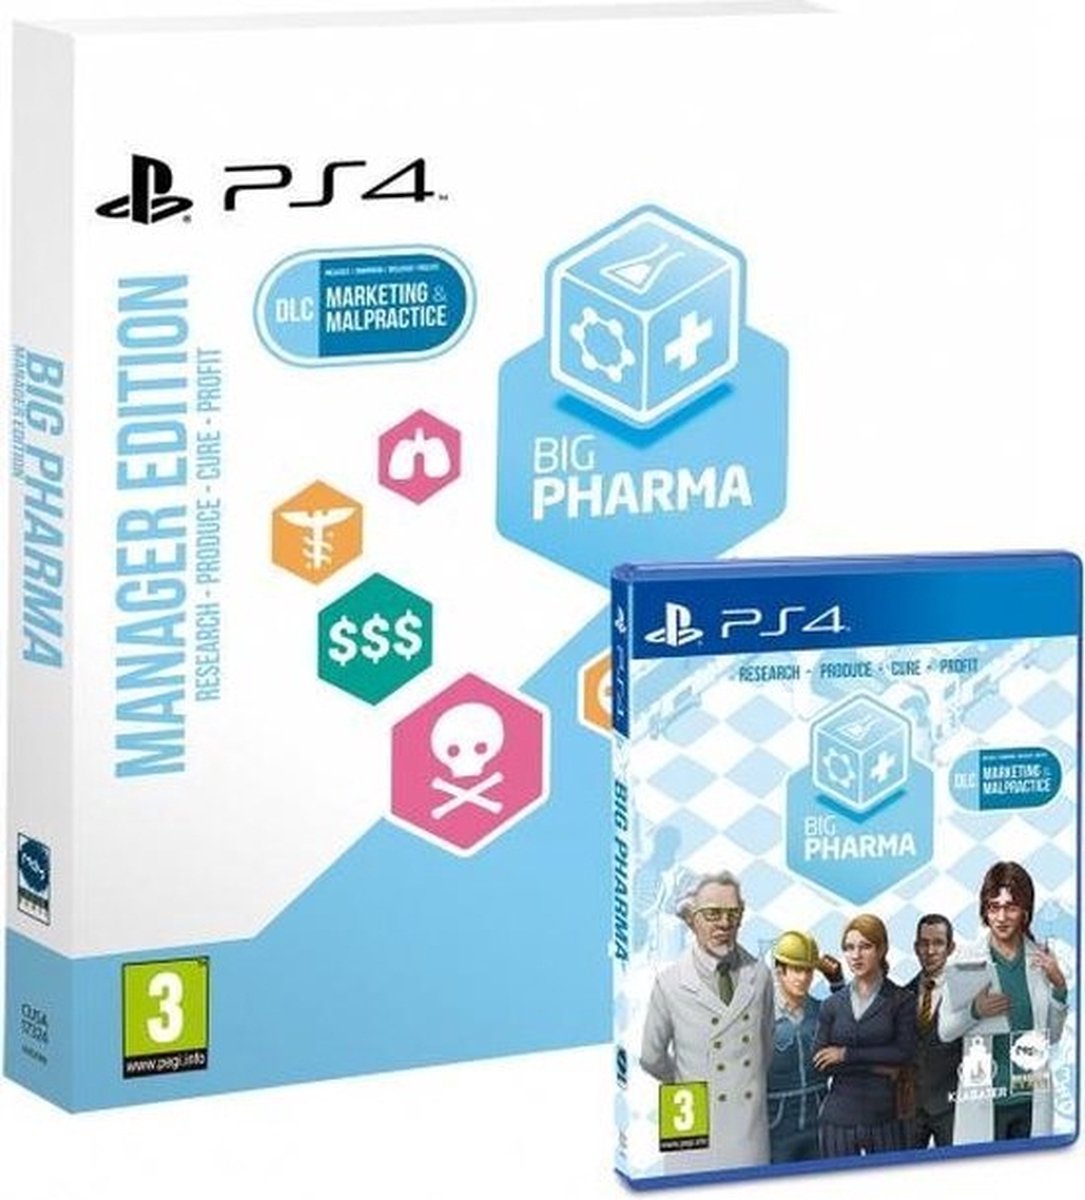 Big Pharma - Manager Edition (PS4), Twice Circled